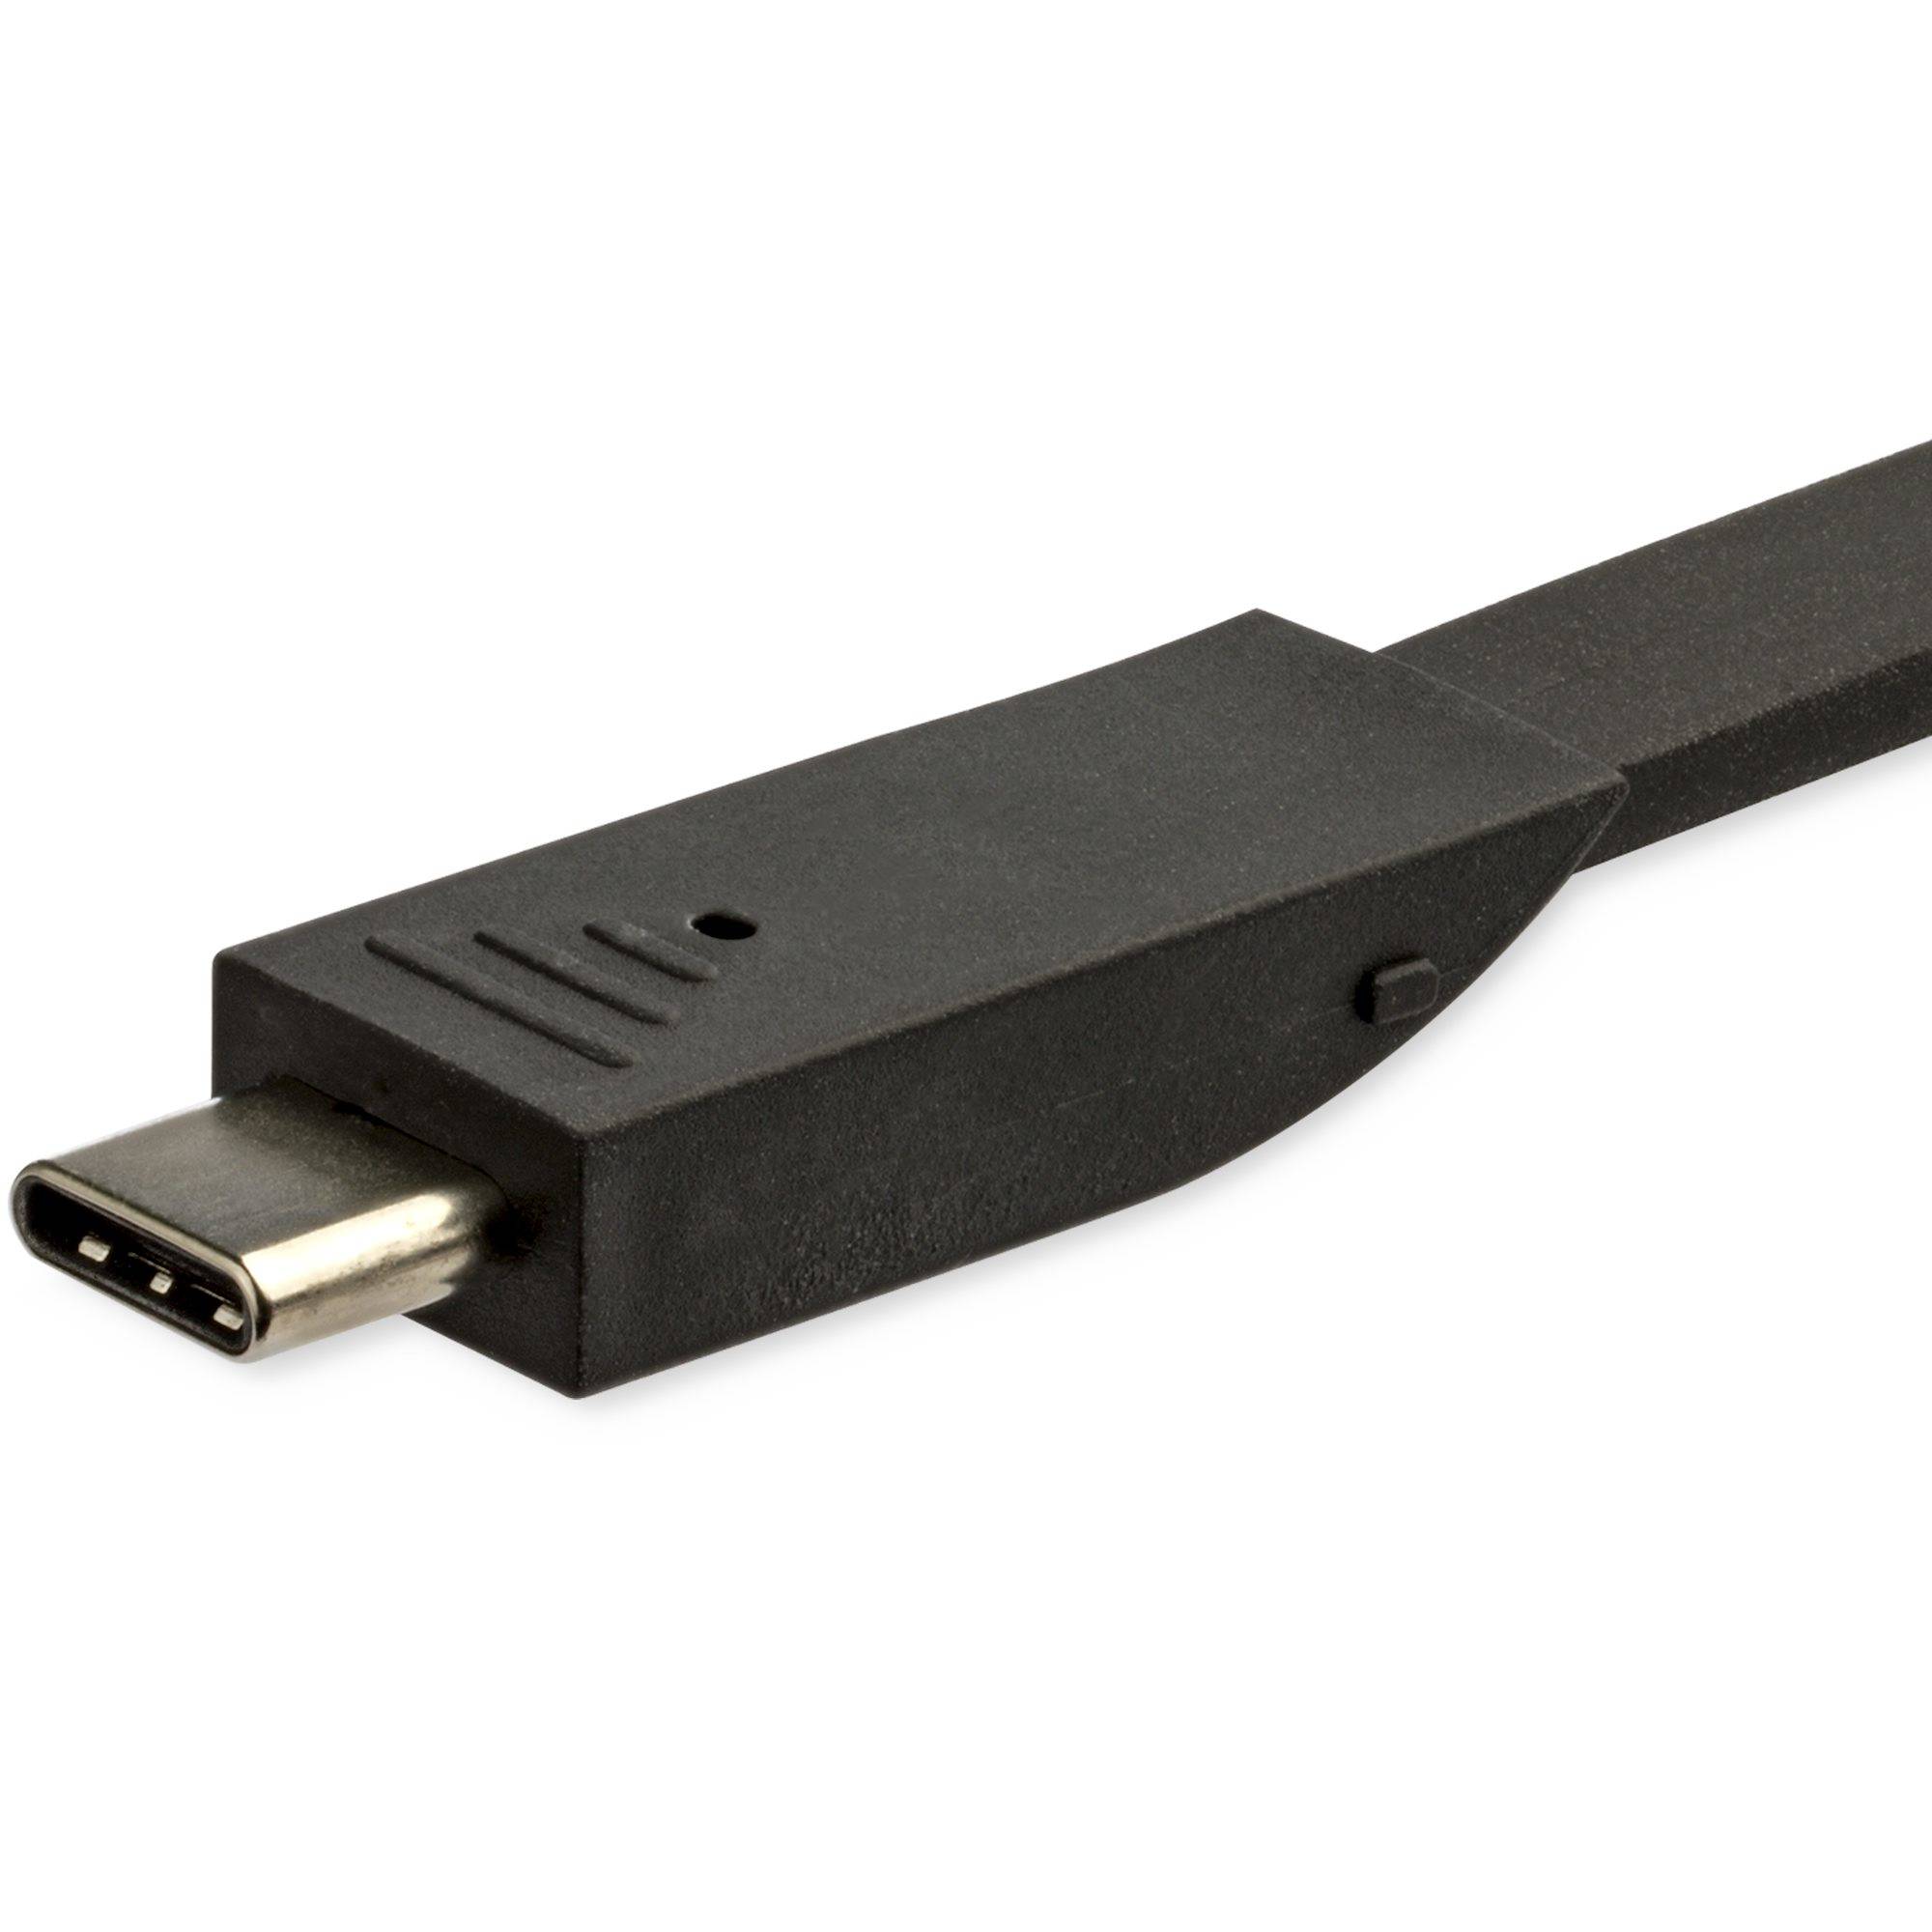 Rca Informatique - image du produit : USB C MULTIPORT ADAPT HDMI VGA 3X USB 3.0-SD- PD 3.0WRAPAROUND